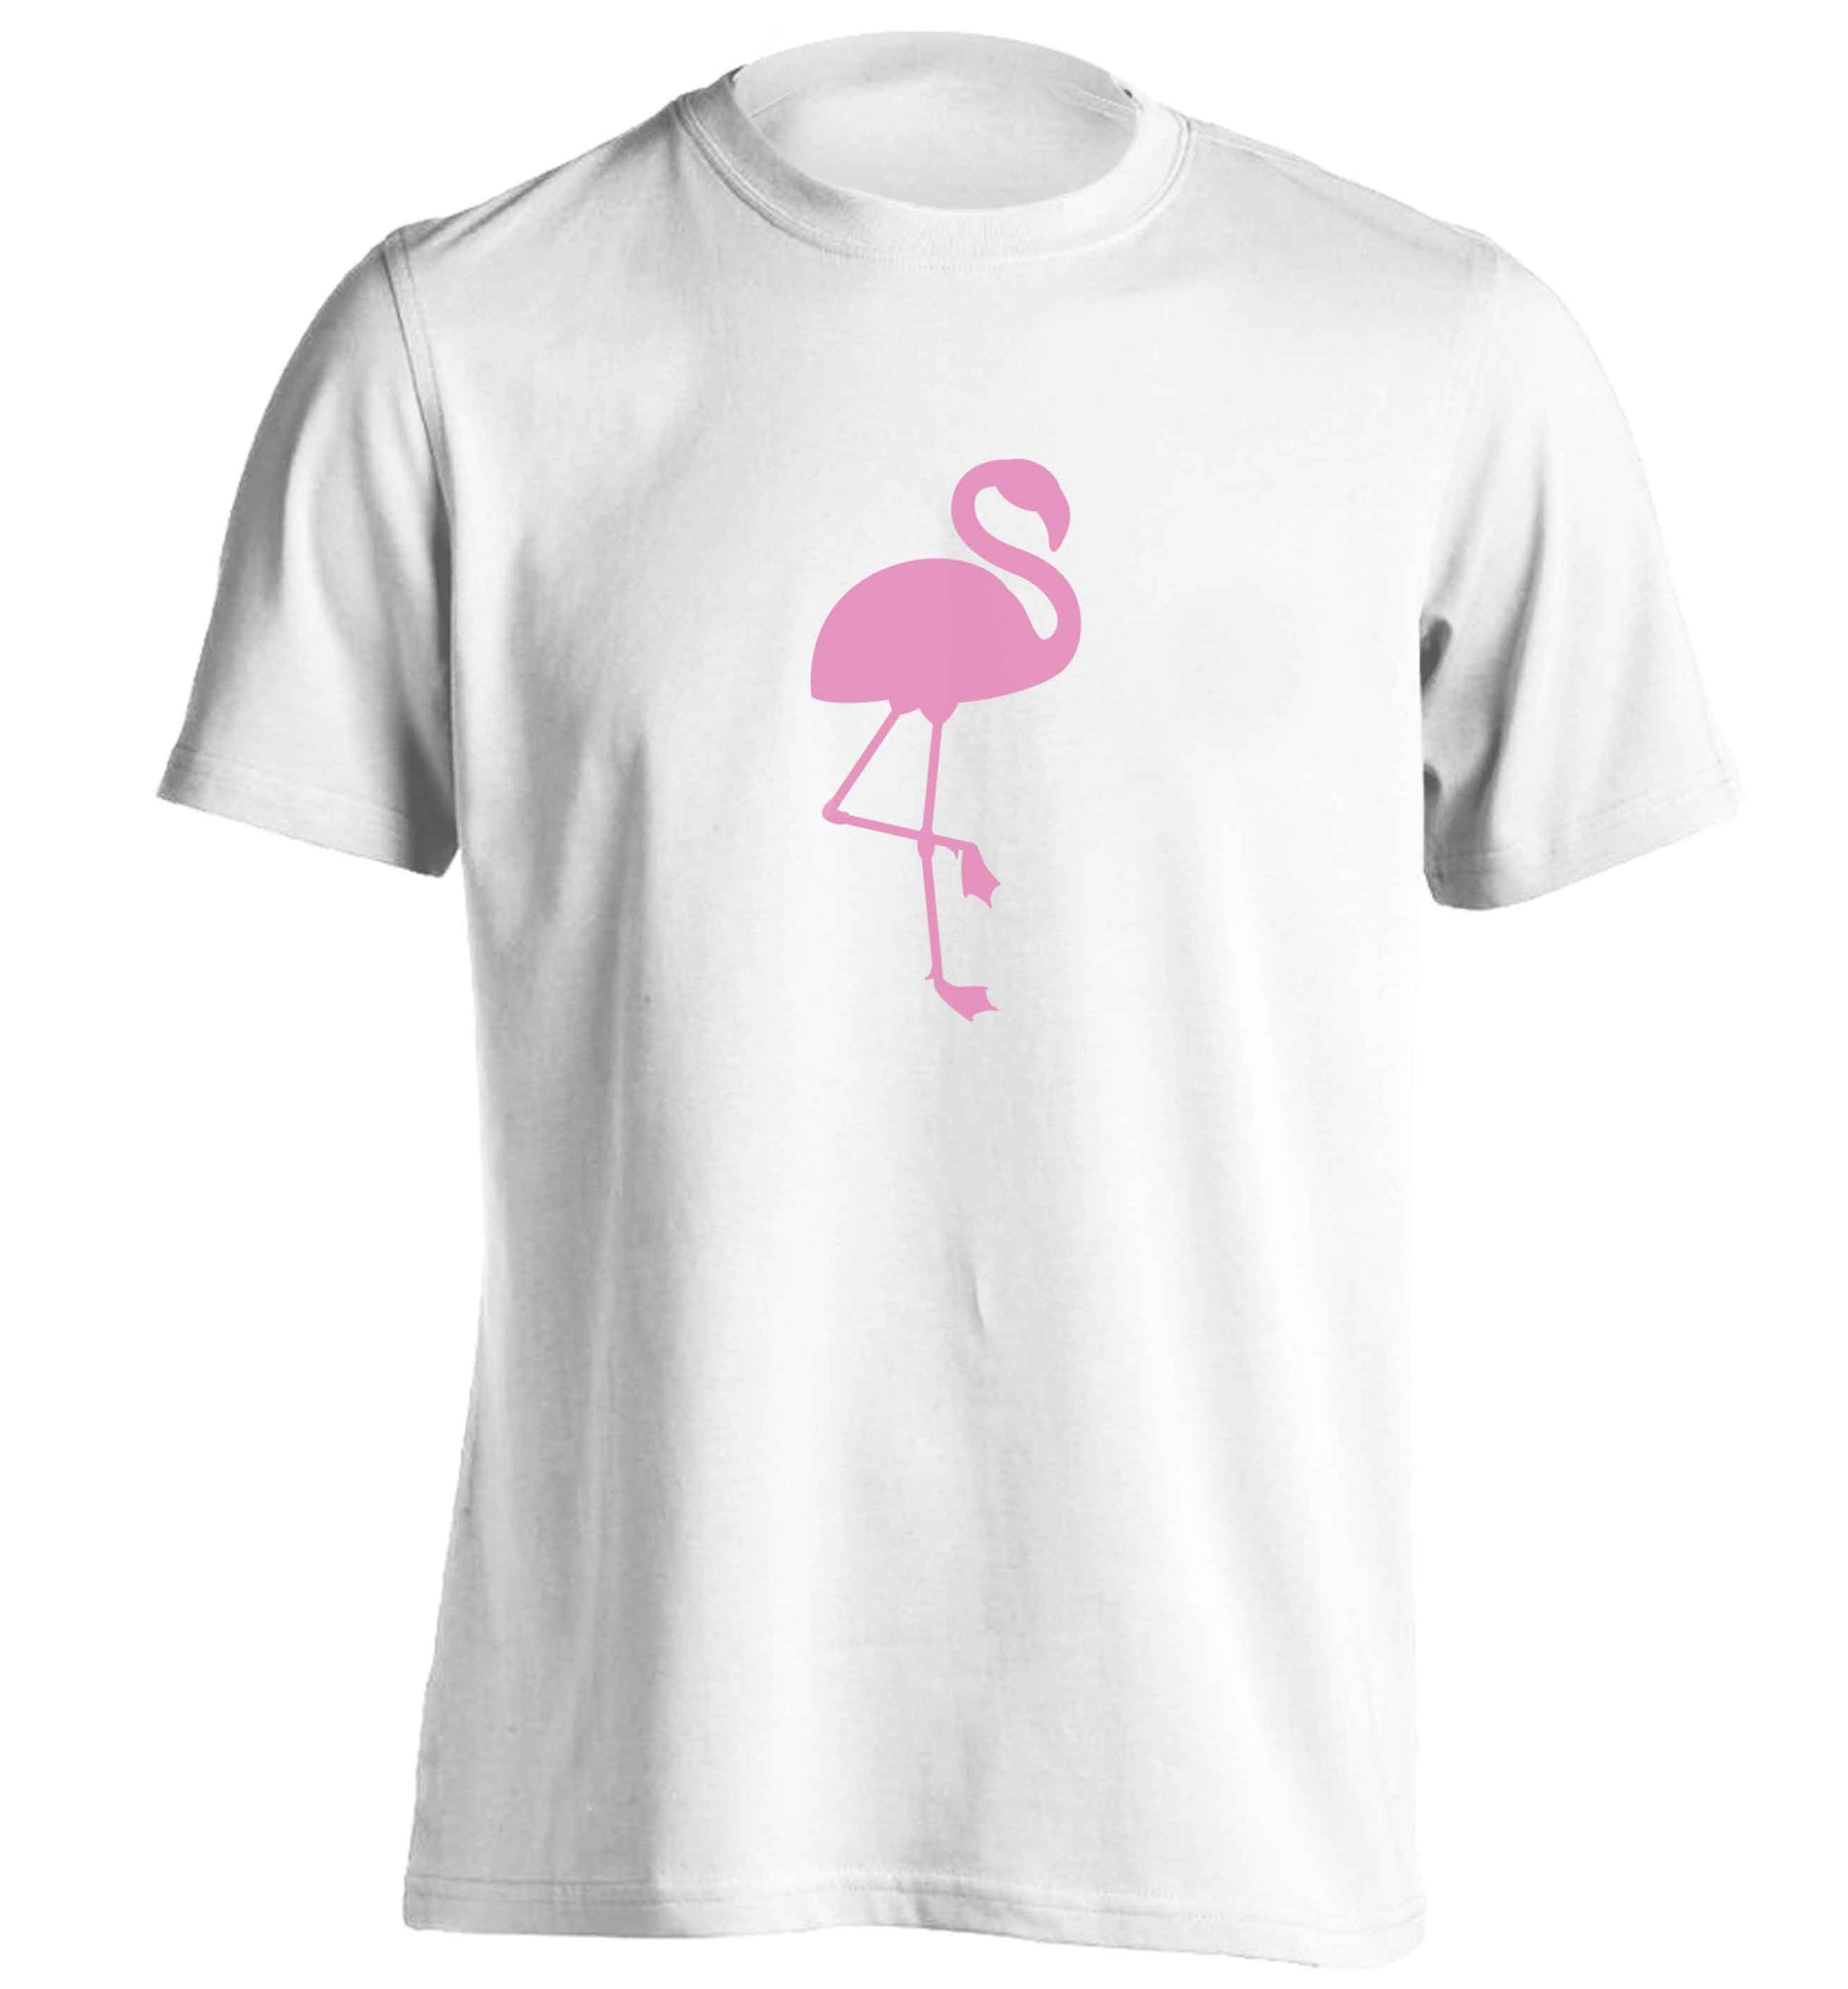 Pink flamingo adults unisex white Tshirt 2XL